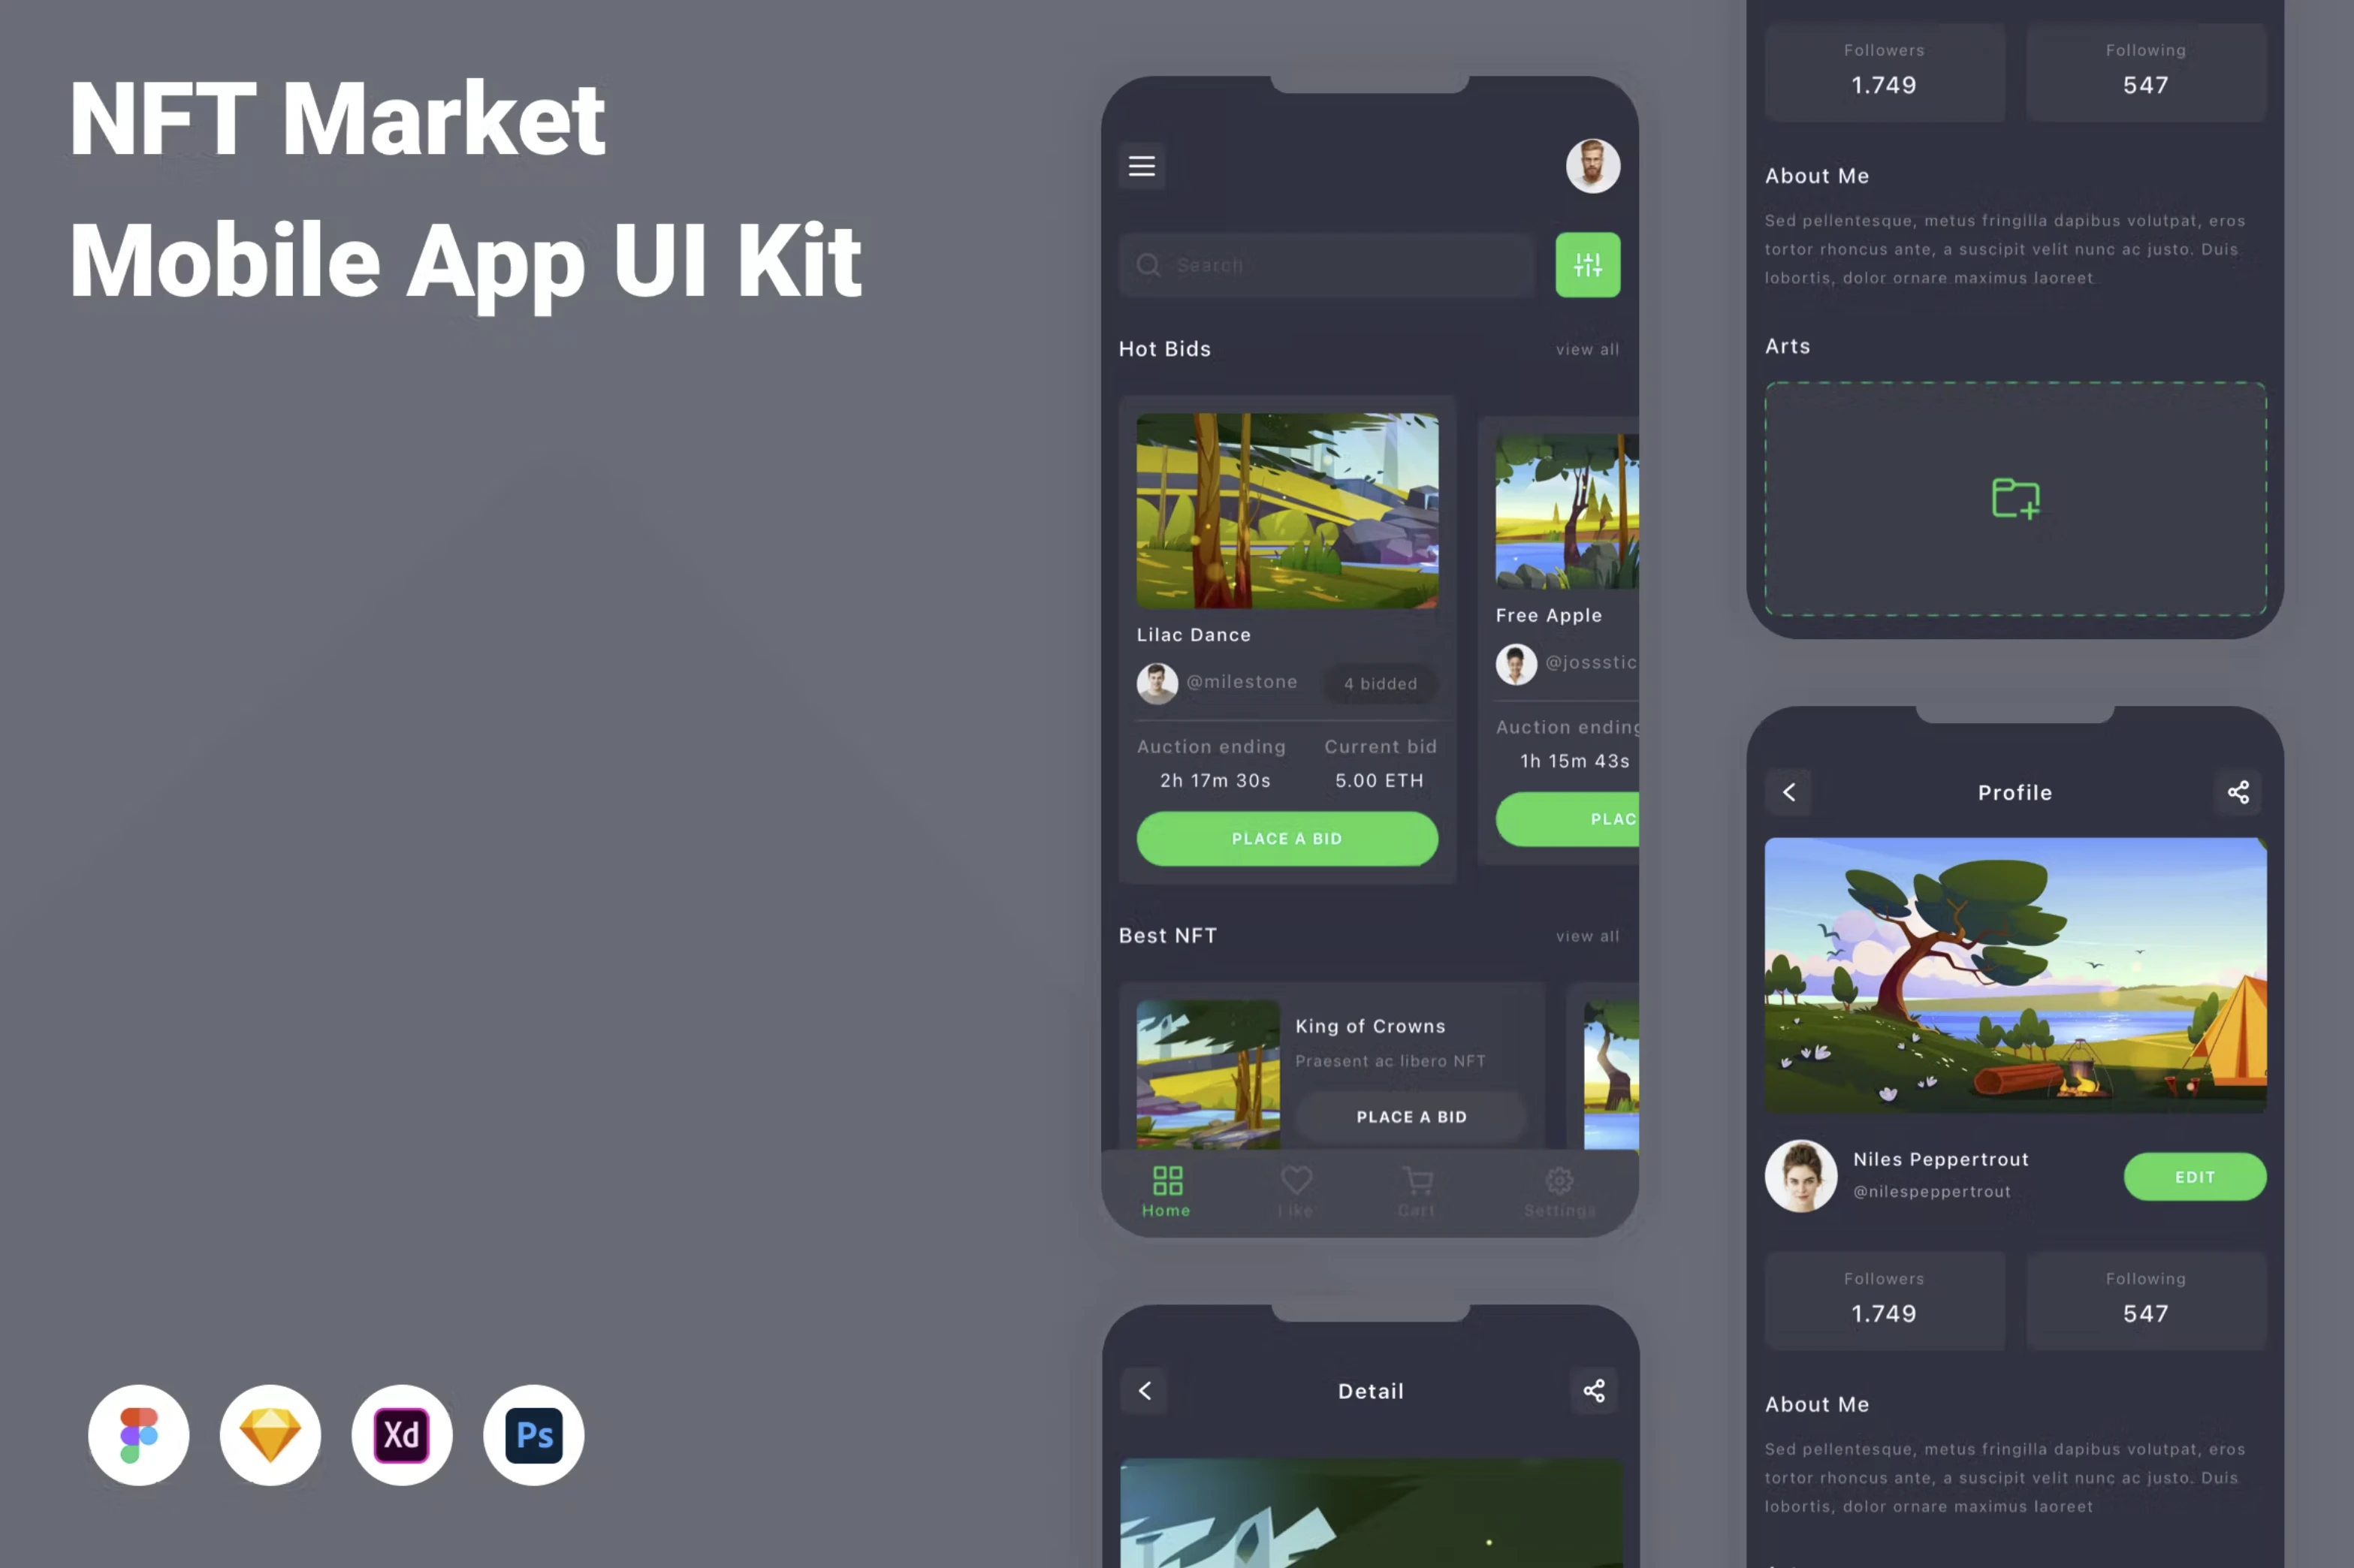 Figma UI kit - NFT Market Mobile App (Community) for Figma and Adobe XD